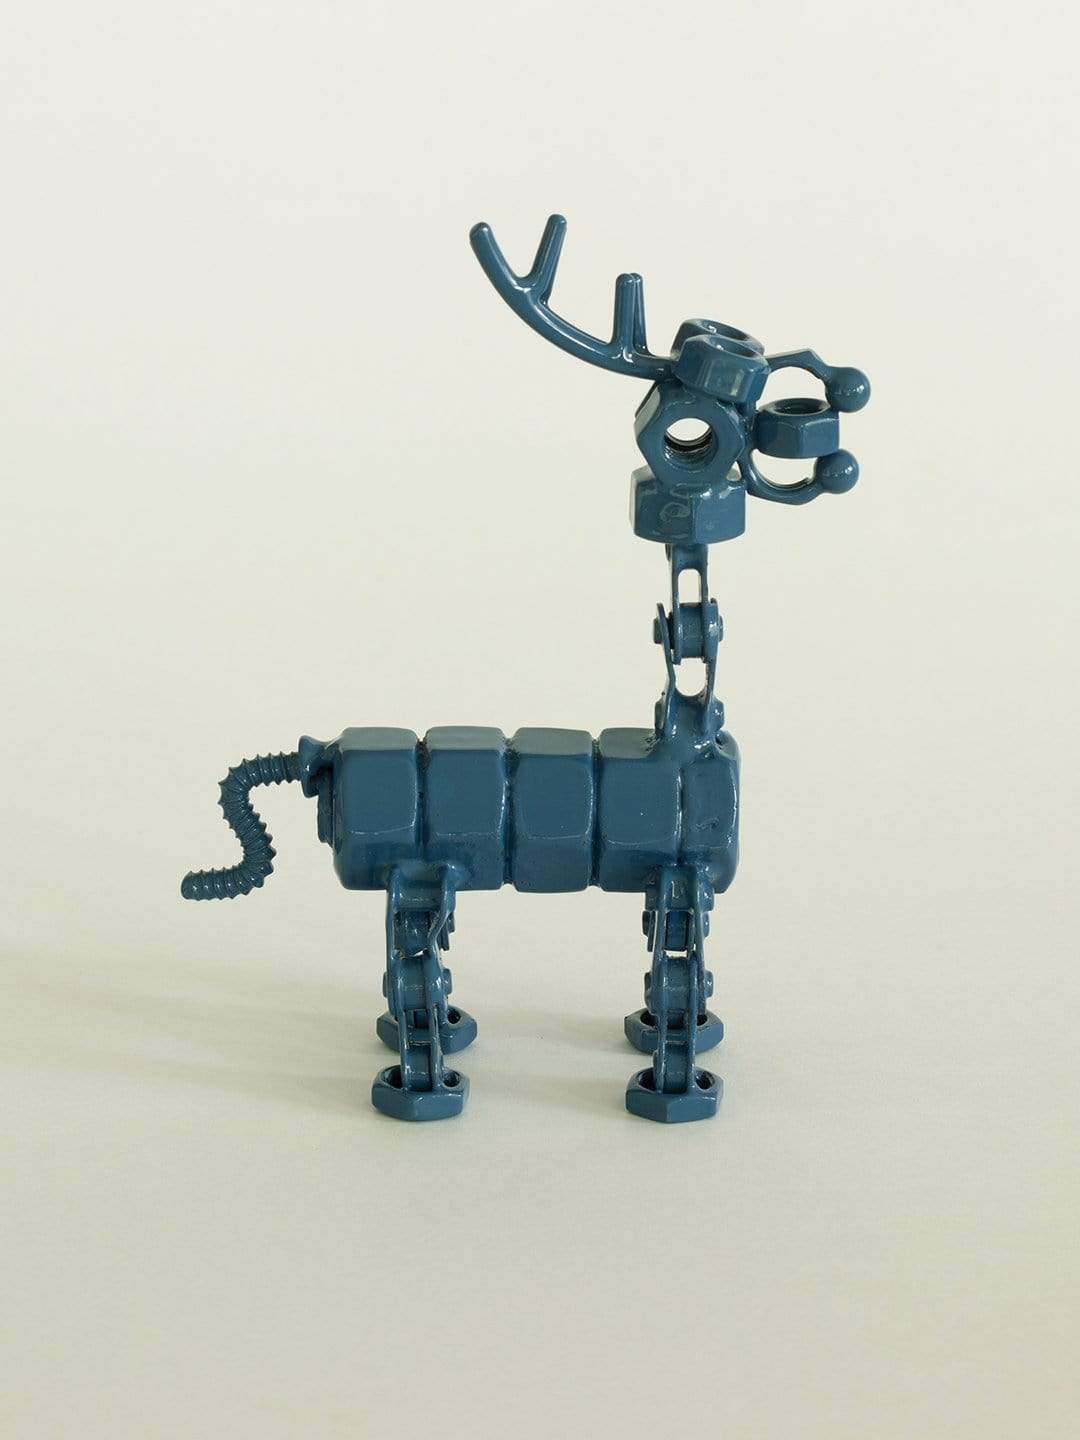 Recycled Decorative Reindeer